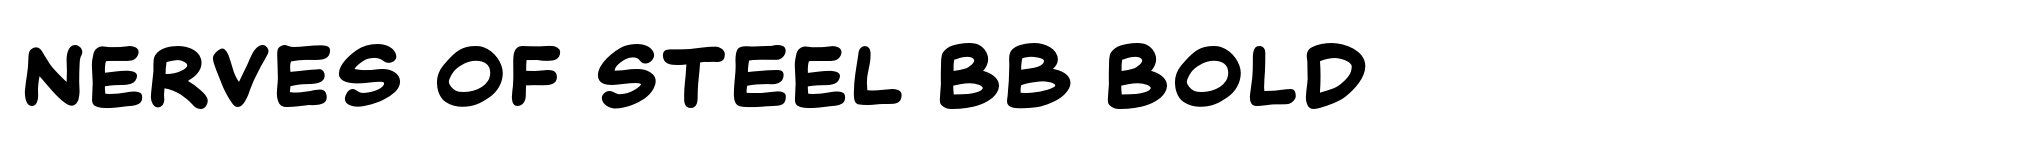 Nerves of Steel BB Bold image